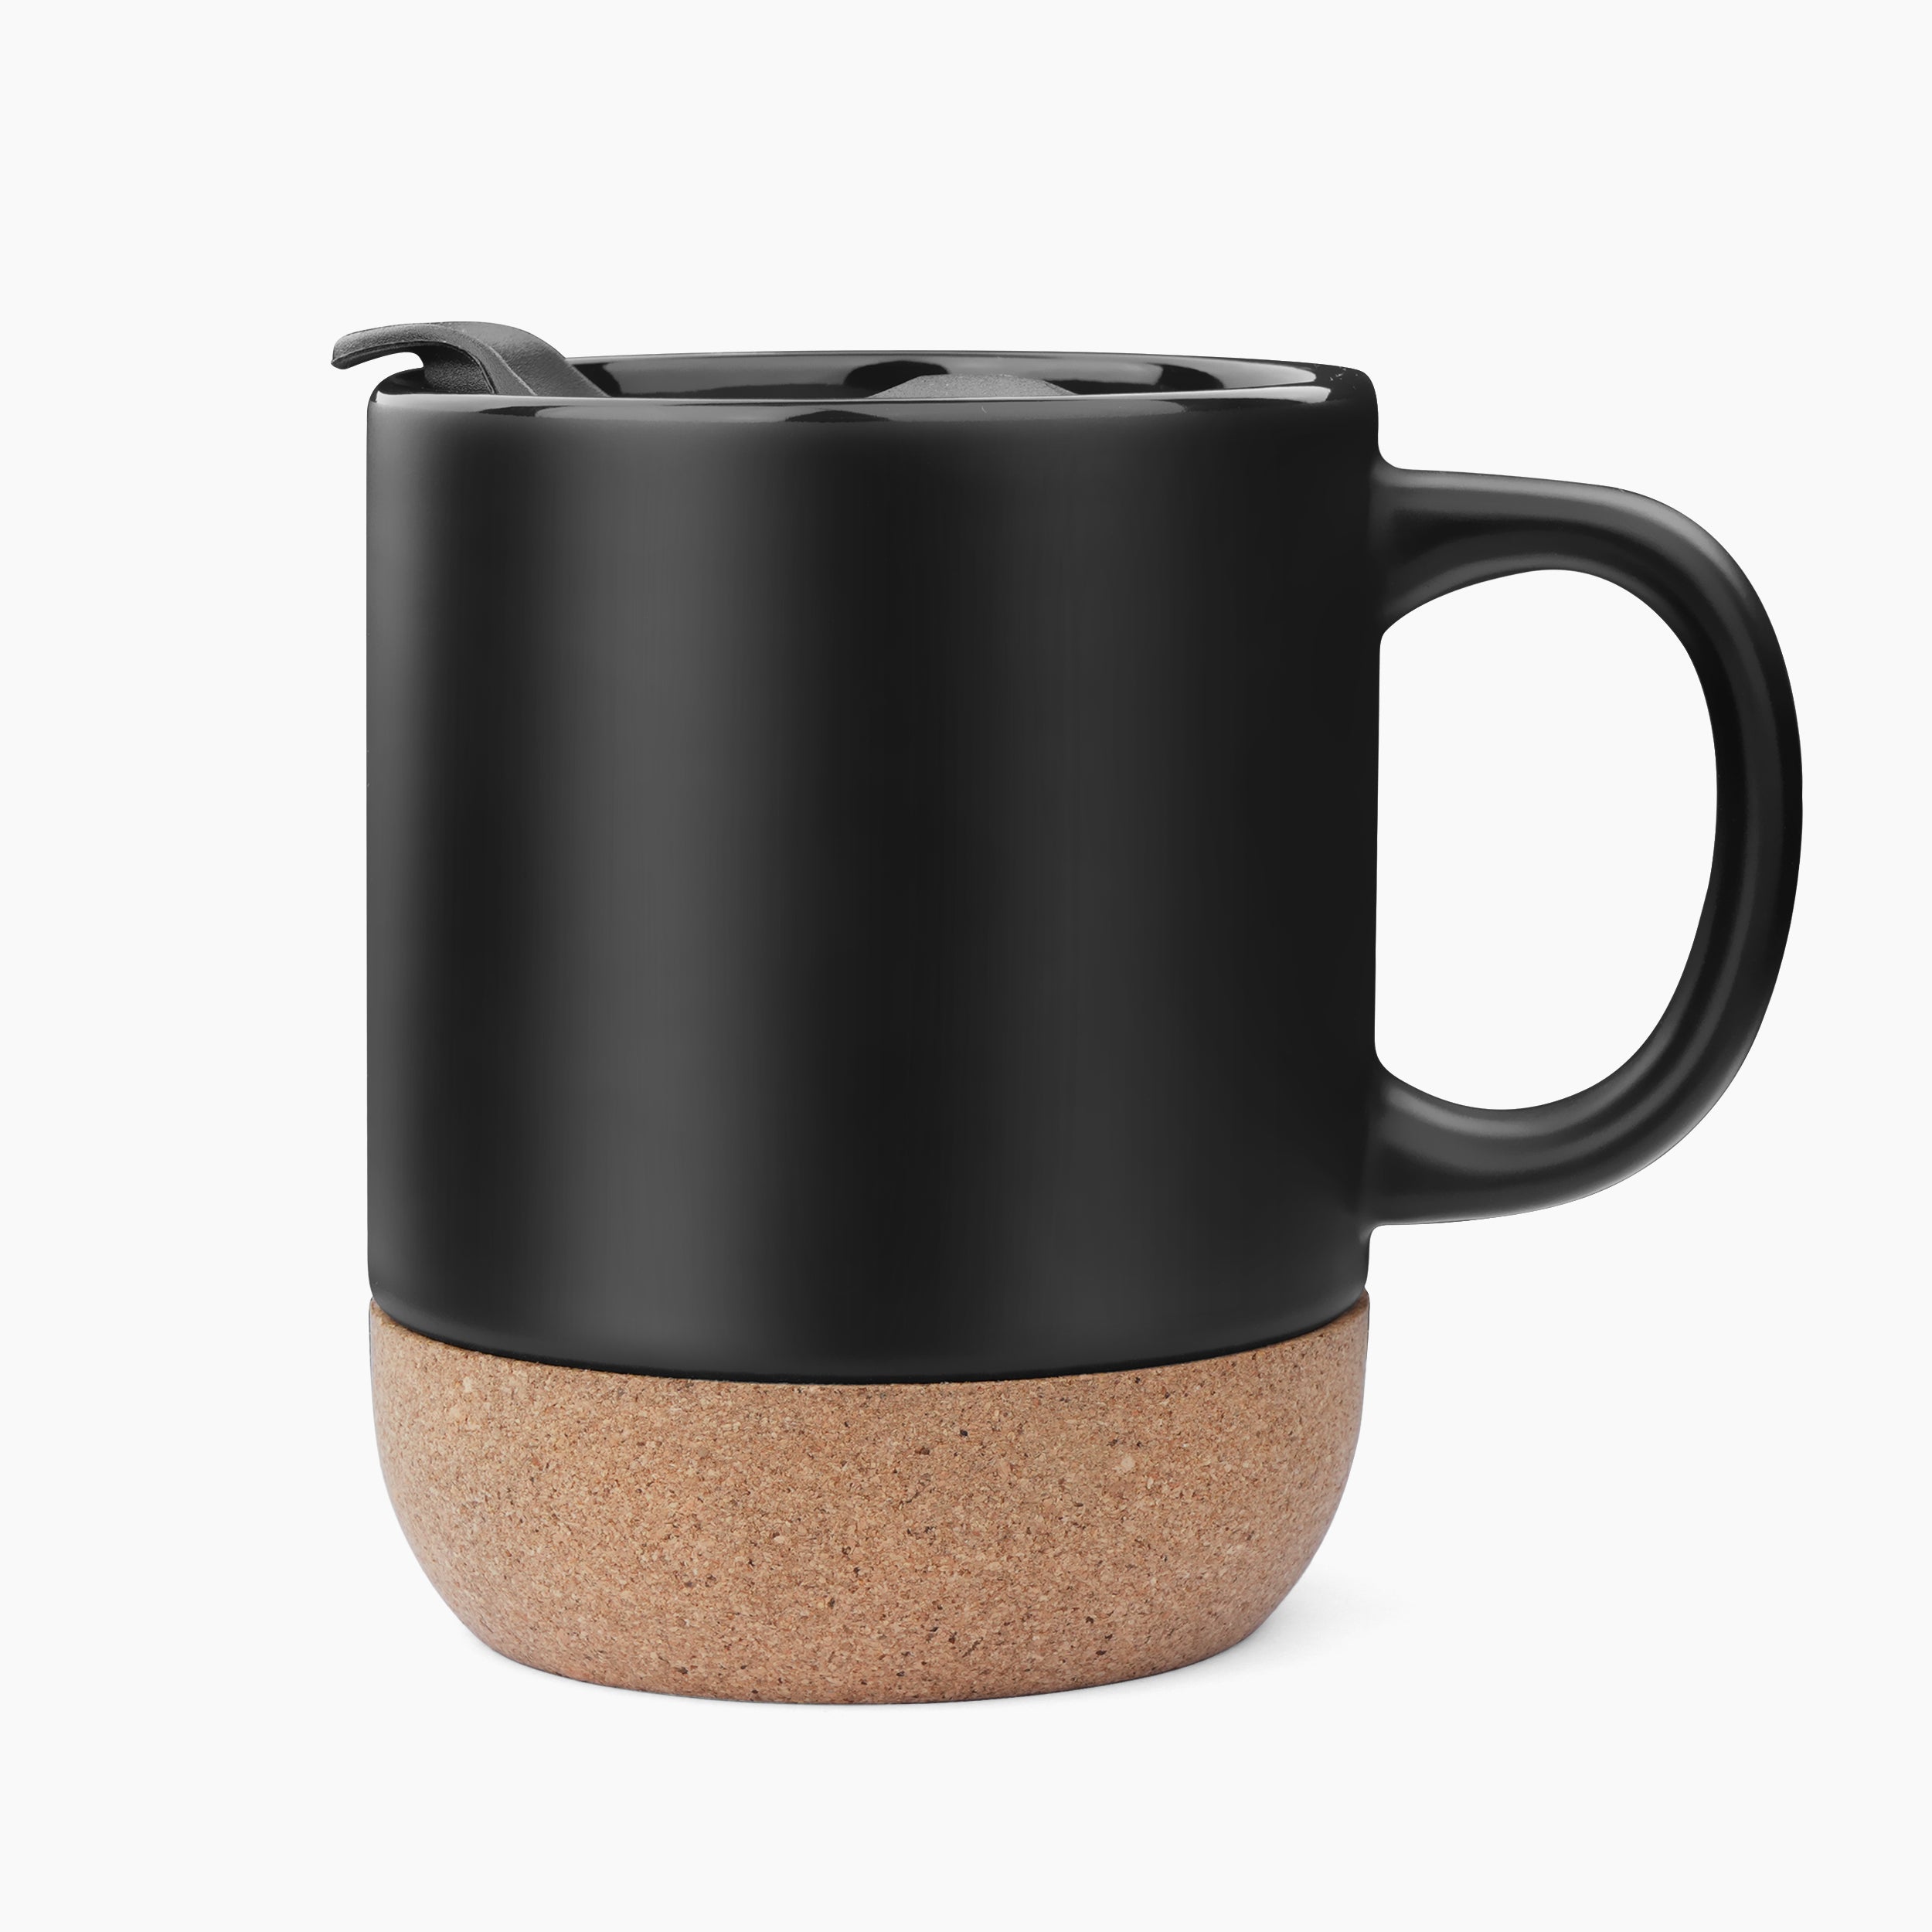 CorkMate Ceramic Coffee Mug With Smart Slider Lid - Black